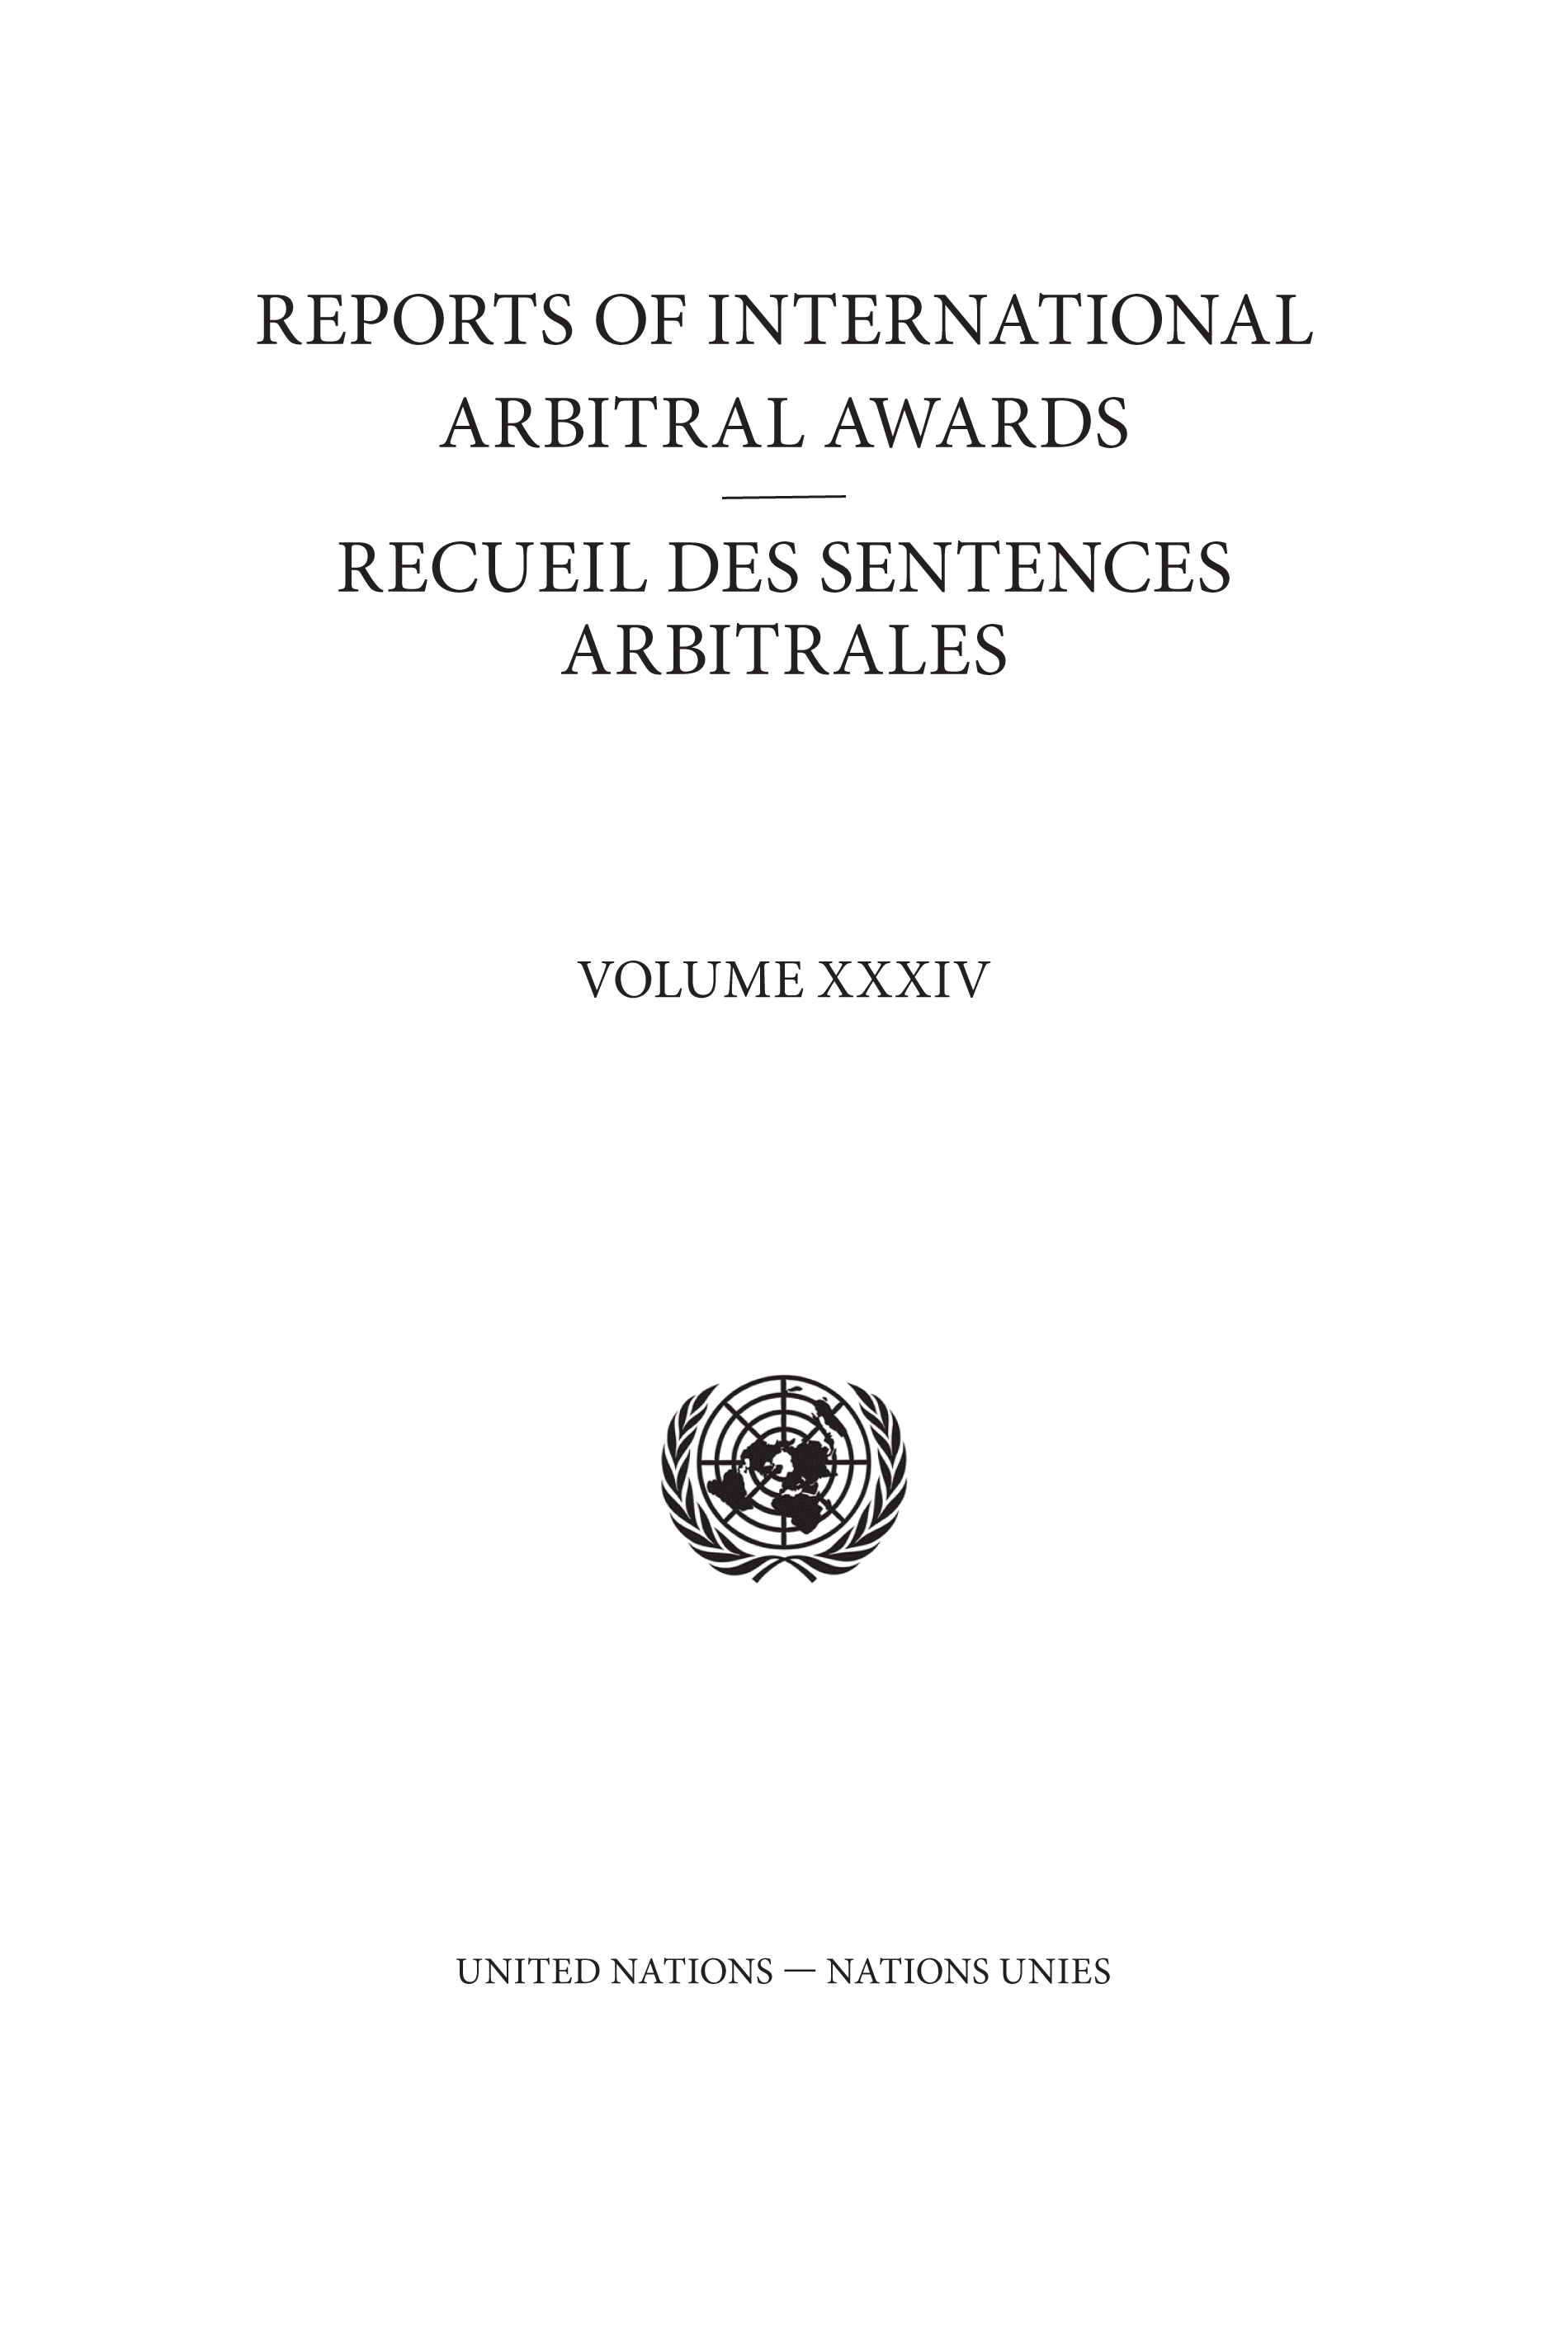 image of Reports of International Arbitral Awards, Vol. XXXIV